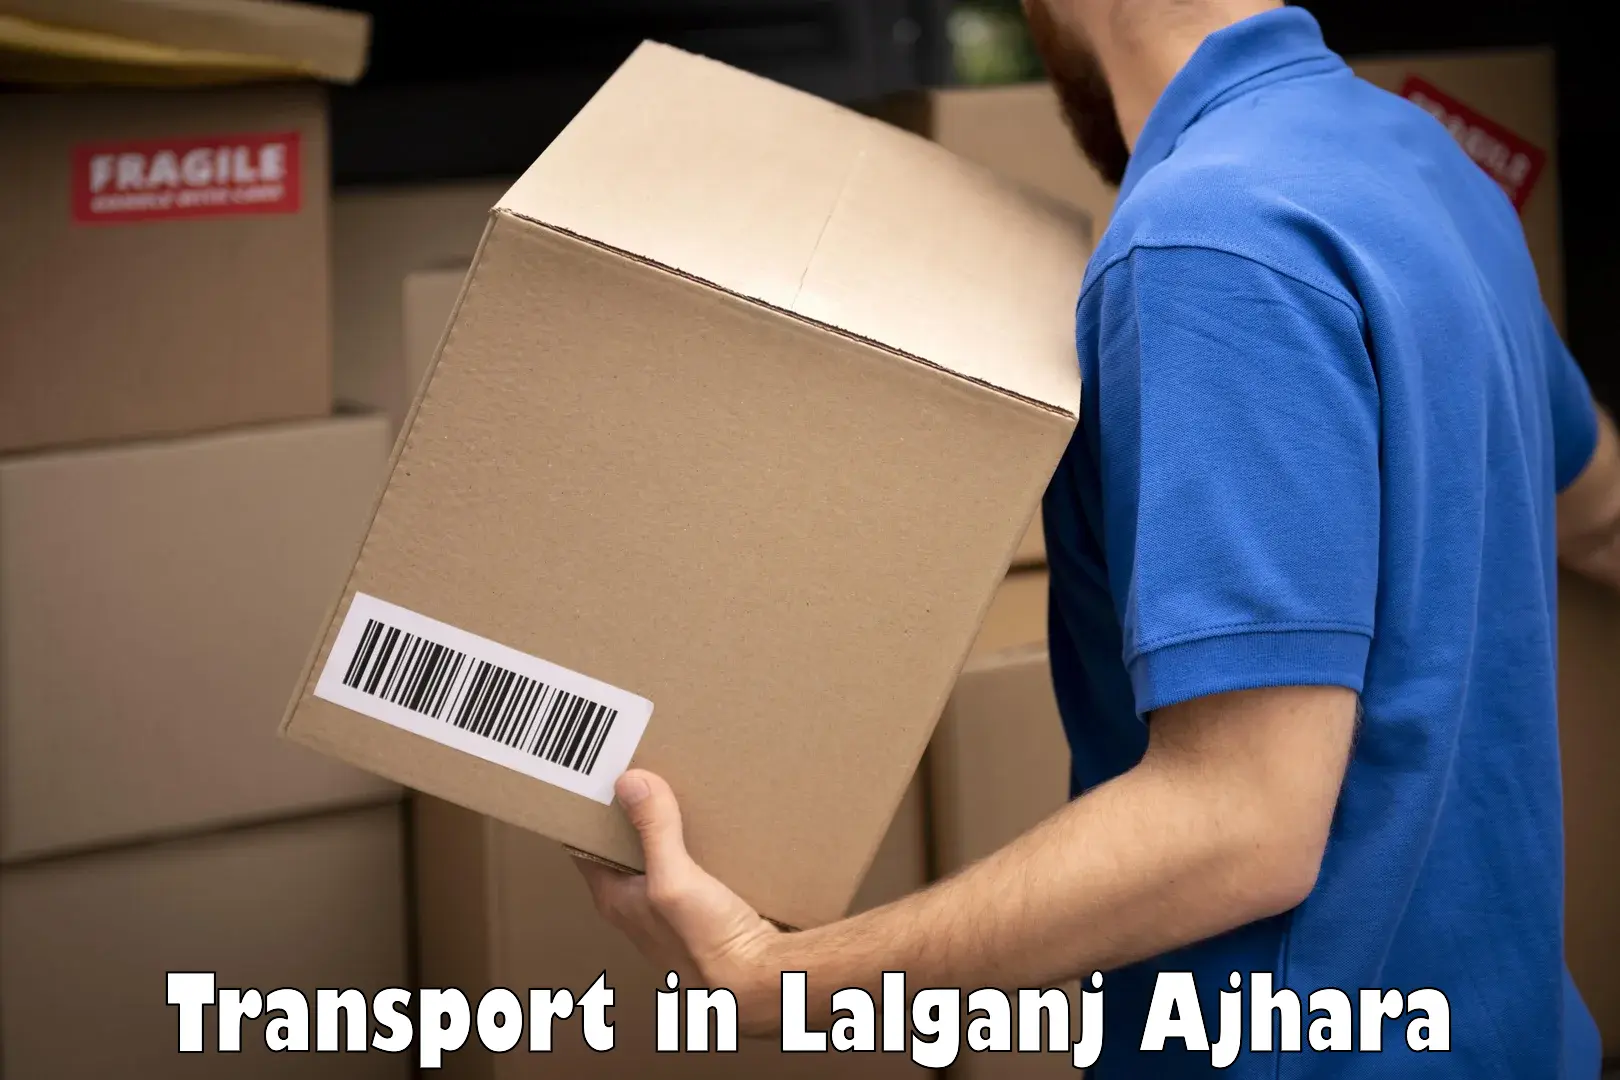 Material transport services in Lalganj Ajhara